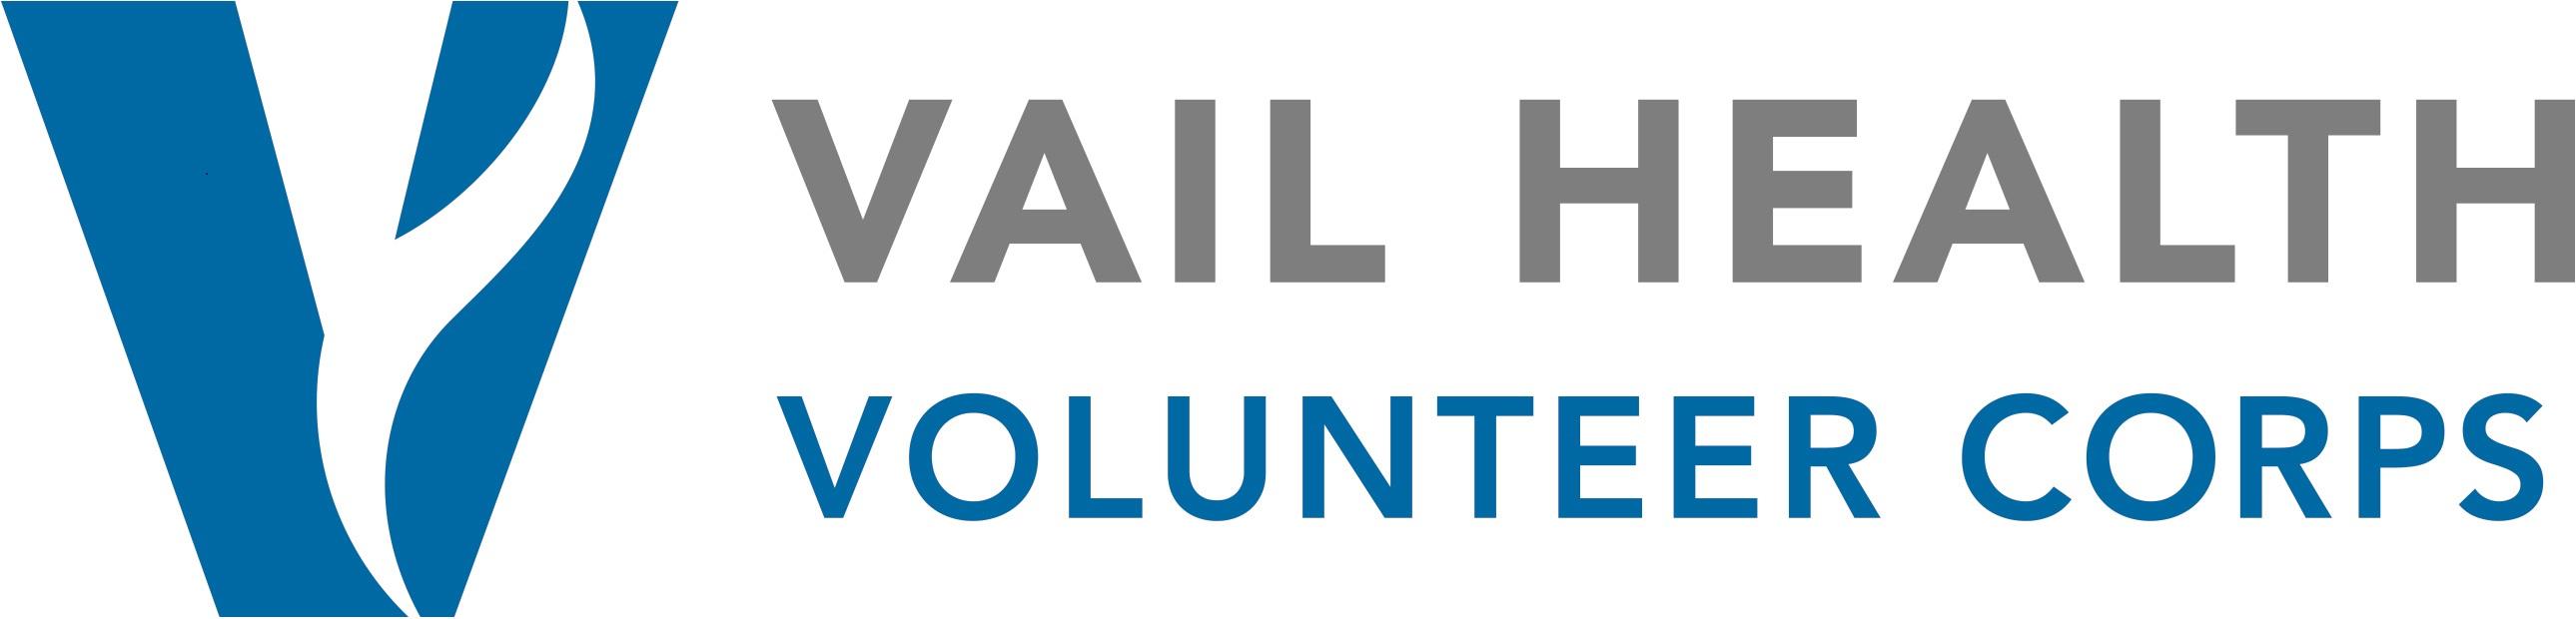 Vail Health Volunteer Corps Volunteer Application